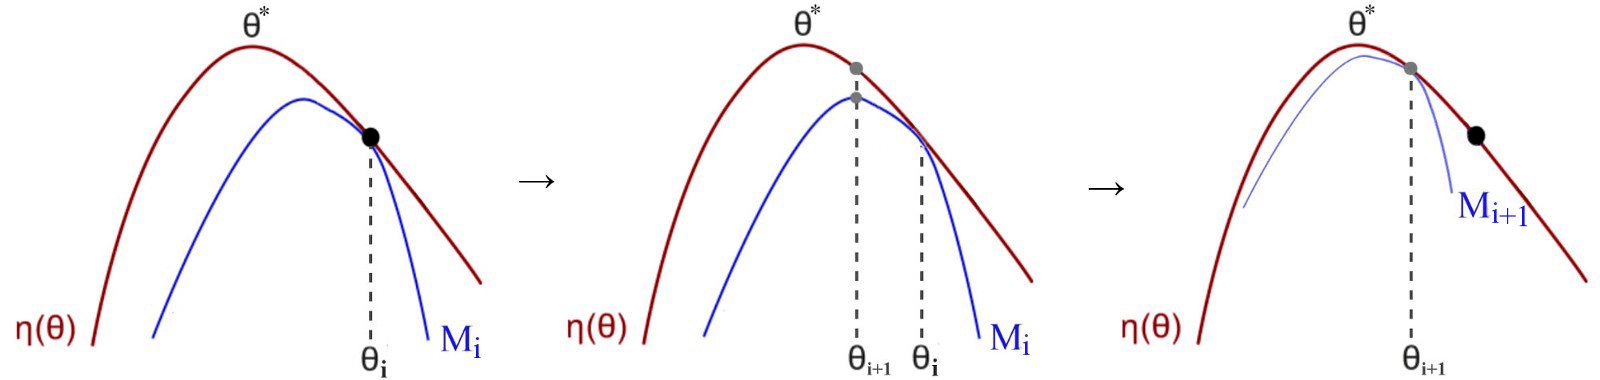 MM algorithm illustration curve